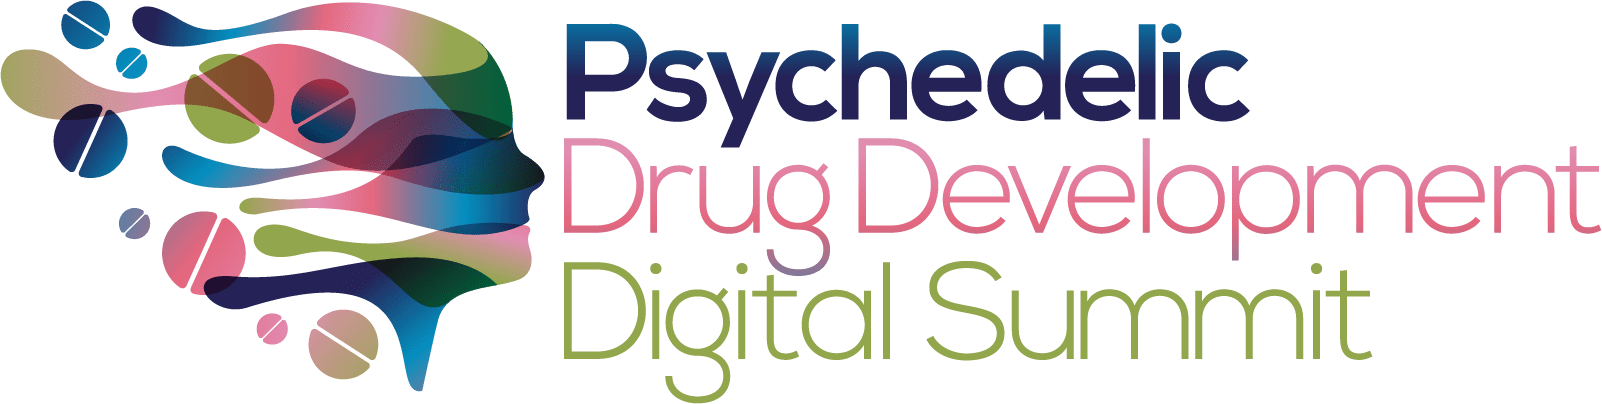 Psychedelic Drug Development Digital Summit